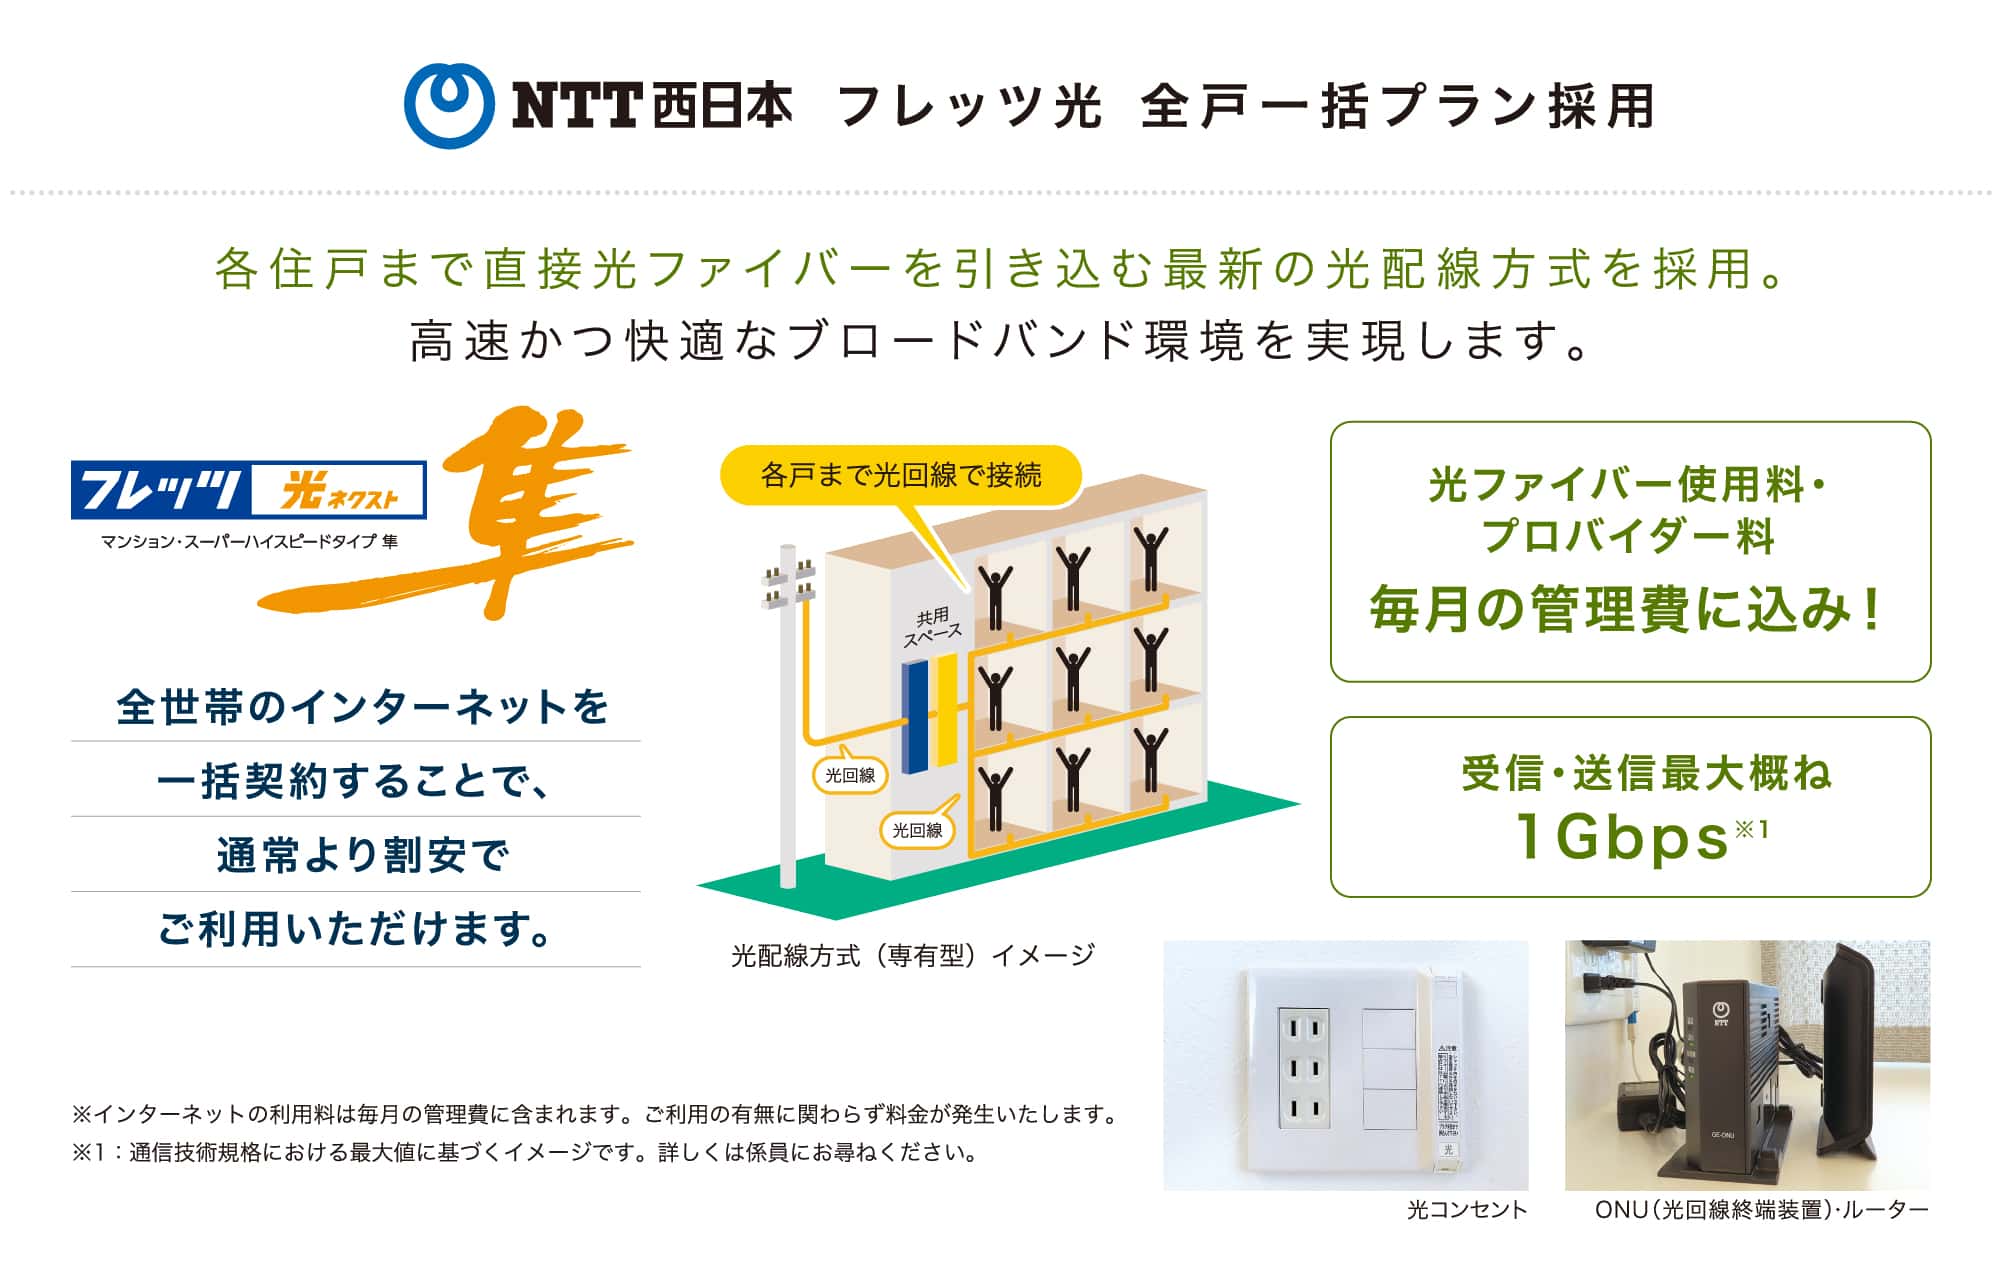 NTT西日本 フレッツ光 全戸一括プラン採用 各住戸まで直接光ファイバーを引き込む最新の光配線方式を採用。高速かつ快適なブロードバンド環境を実現します。フレッツ光ネクスト隼 全世帯のインターネットを一括契約することで、通常より割安でご利用いただけます。光ファイバー使用料・プロバイダー料 毎月の管理費にコミコミ！受信・送信最大概ね1Gbps